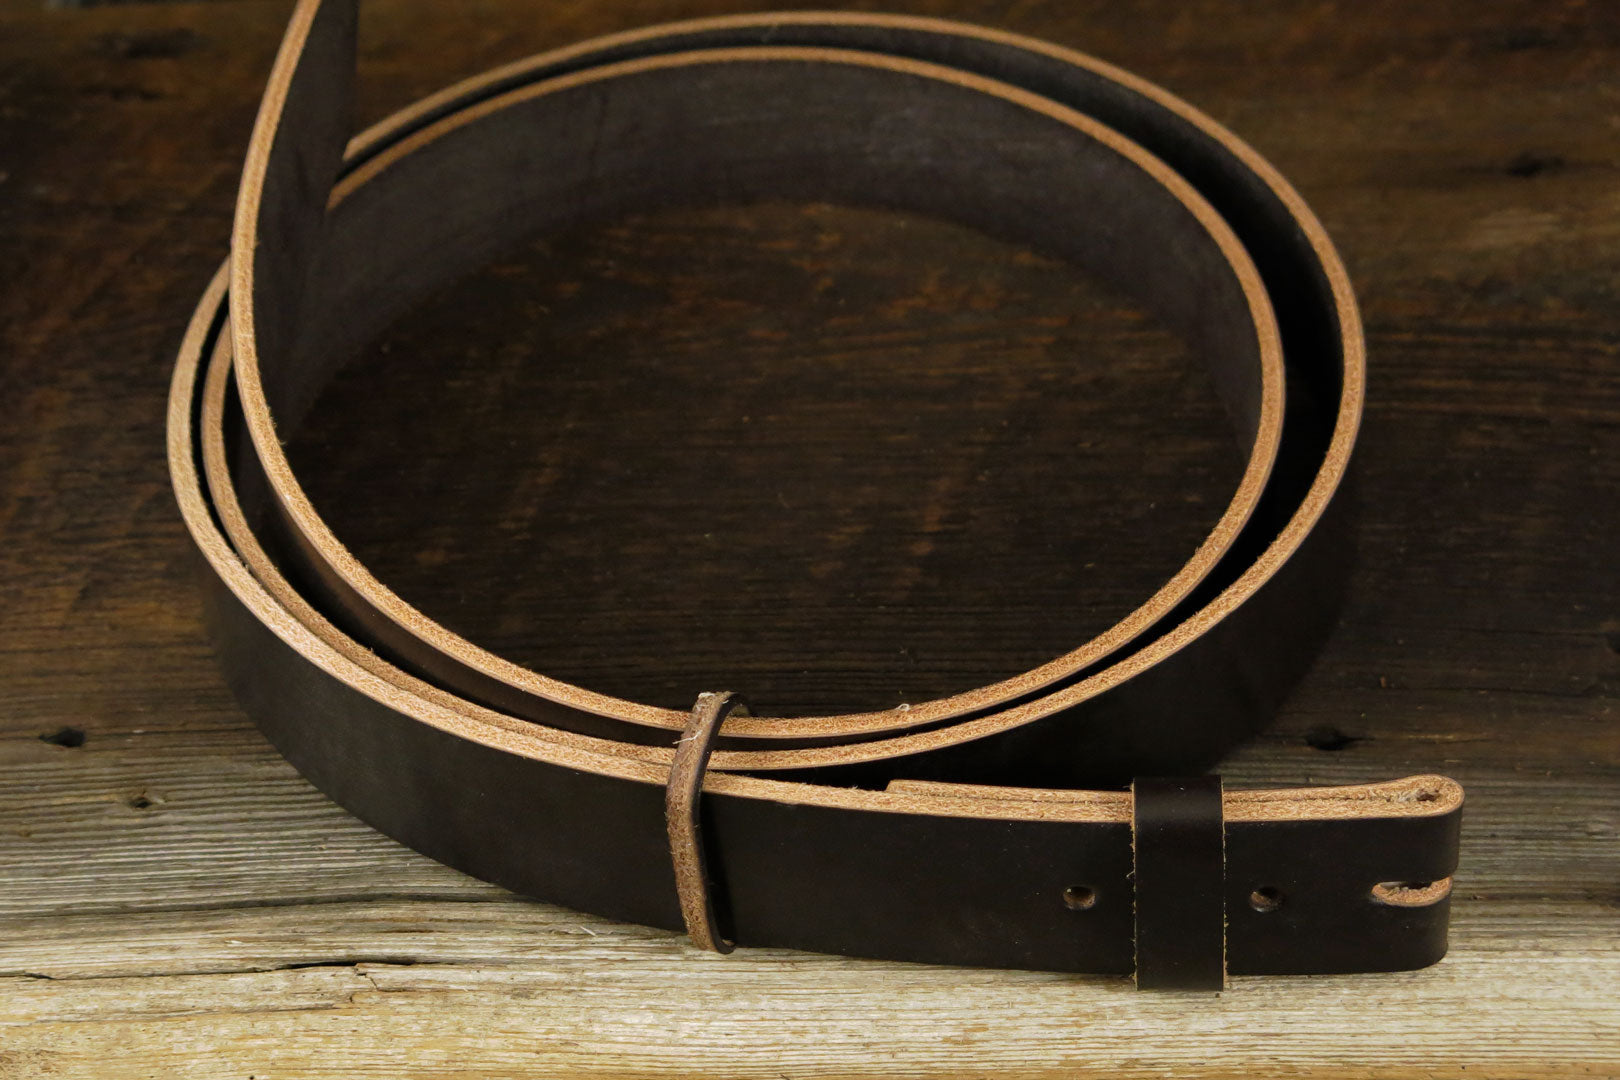 English Bridle Leather Straps - Medium Brown, 10-12 oz